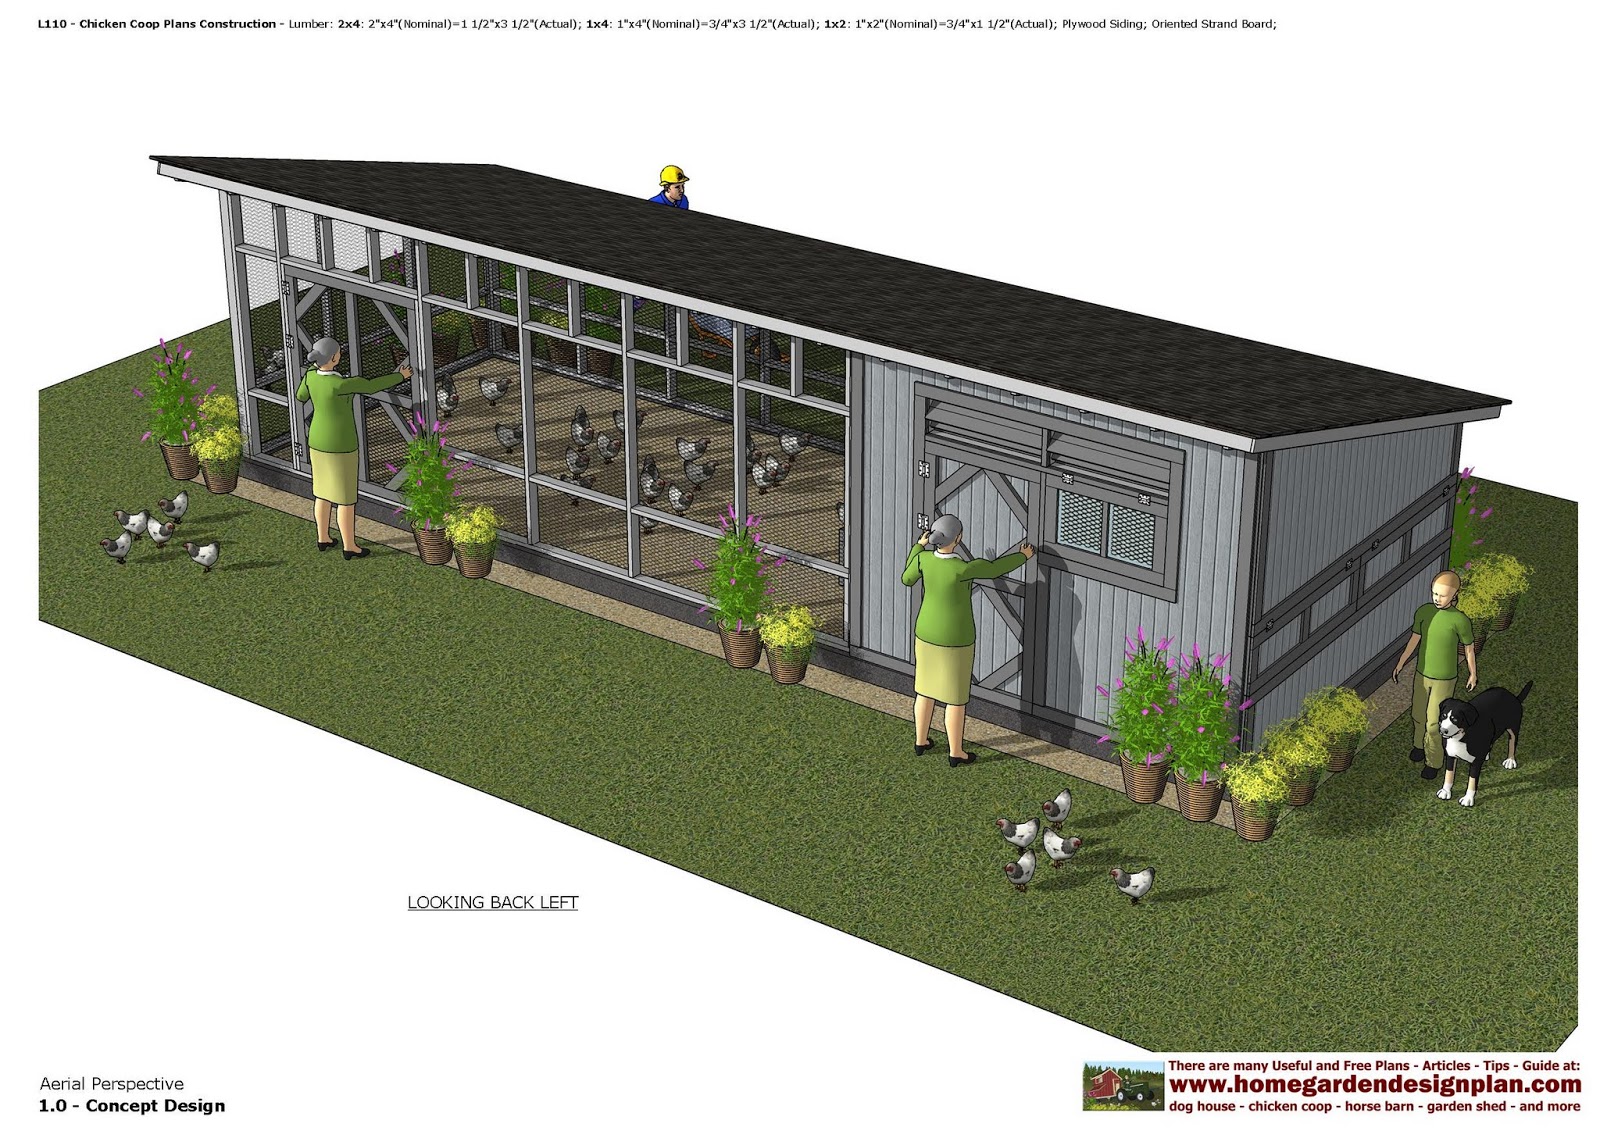 home garden plans: L110 - Chicken Coop Plans Construction ...